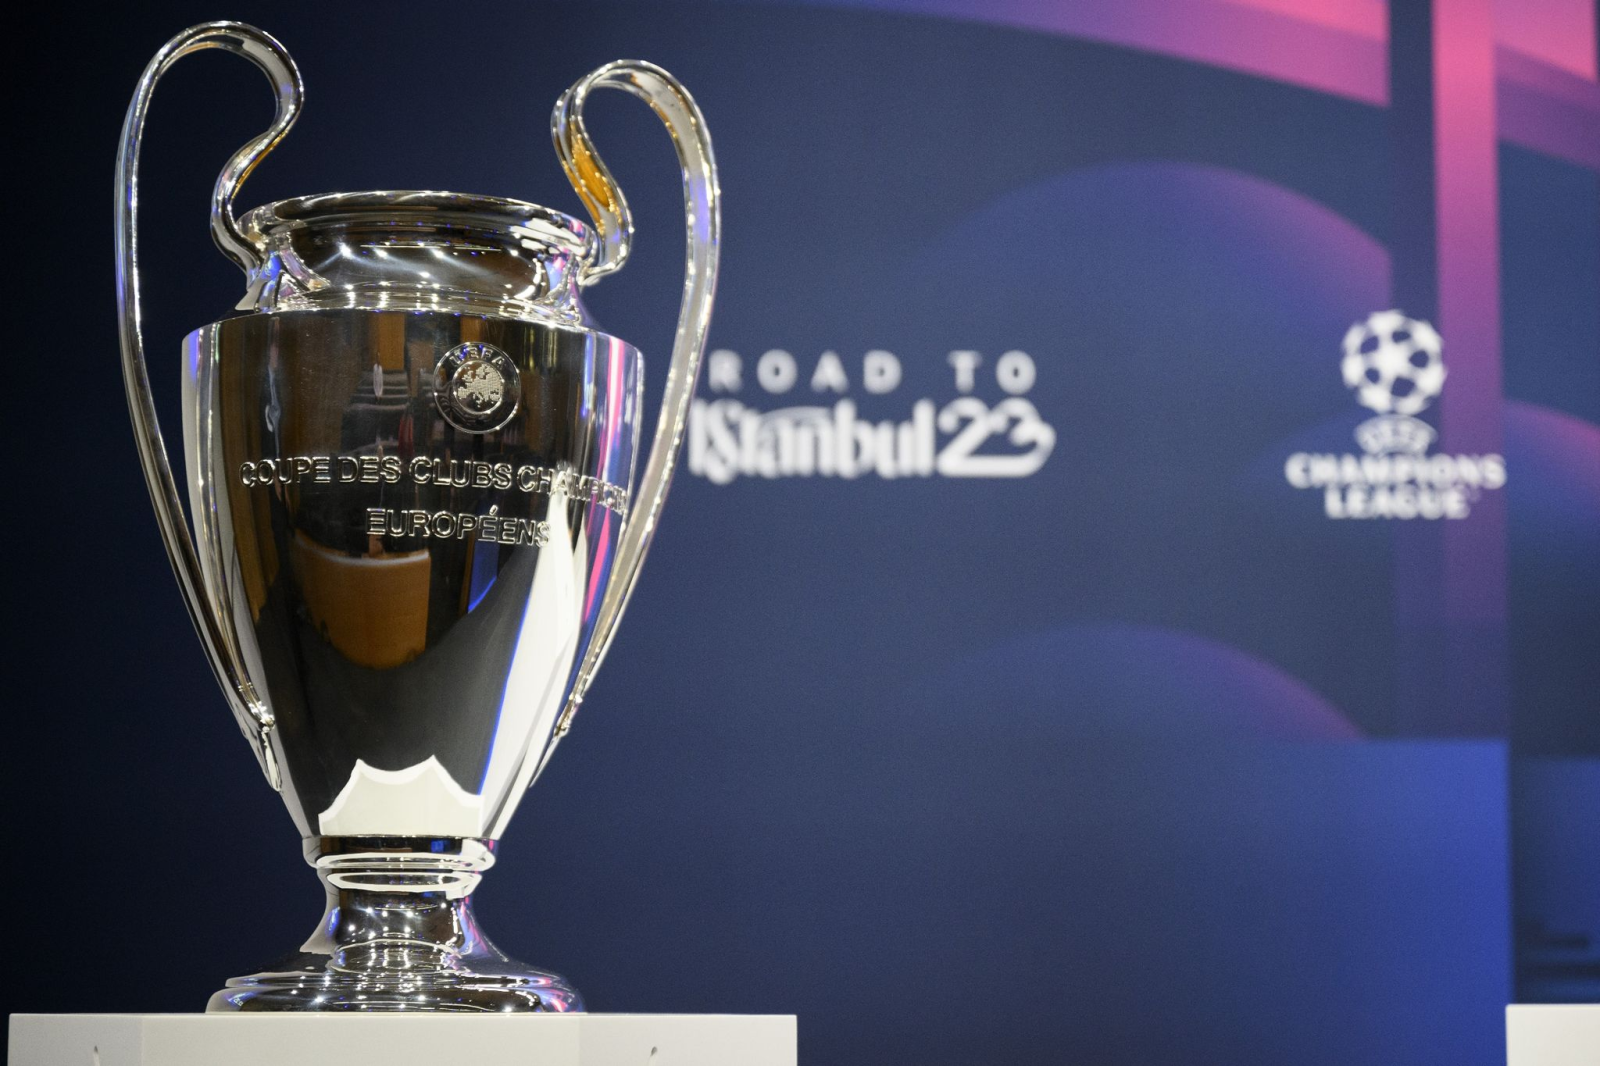 Blick auf den Champions League-Pokal während der Auslosung des Achtelfinales der UEFA Champions League.